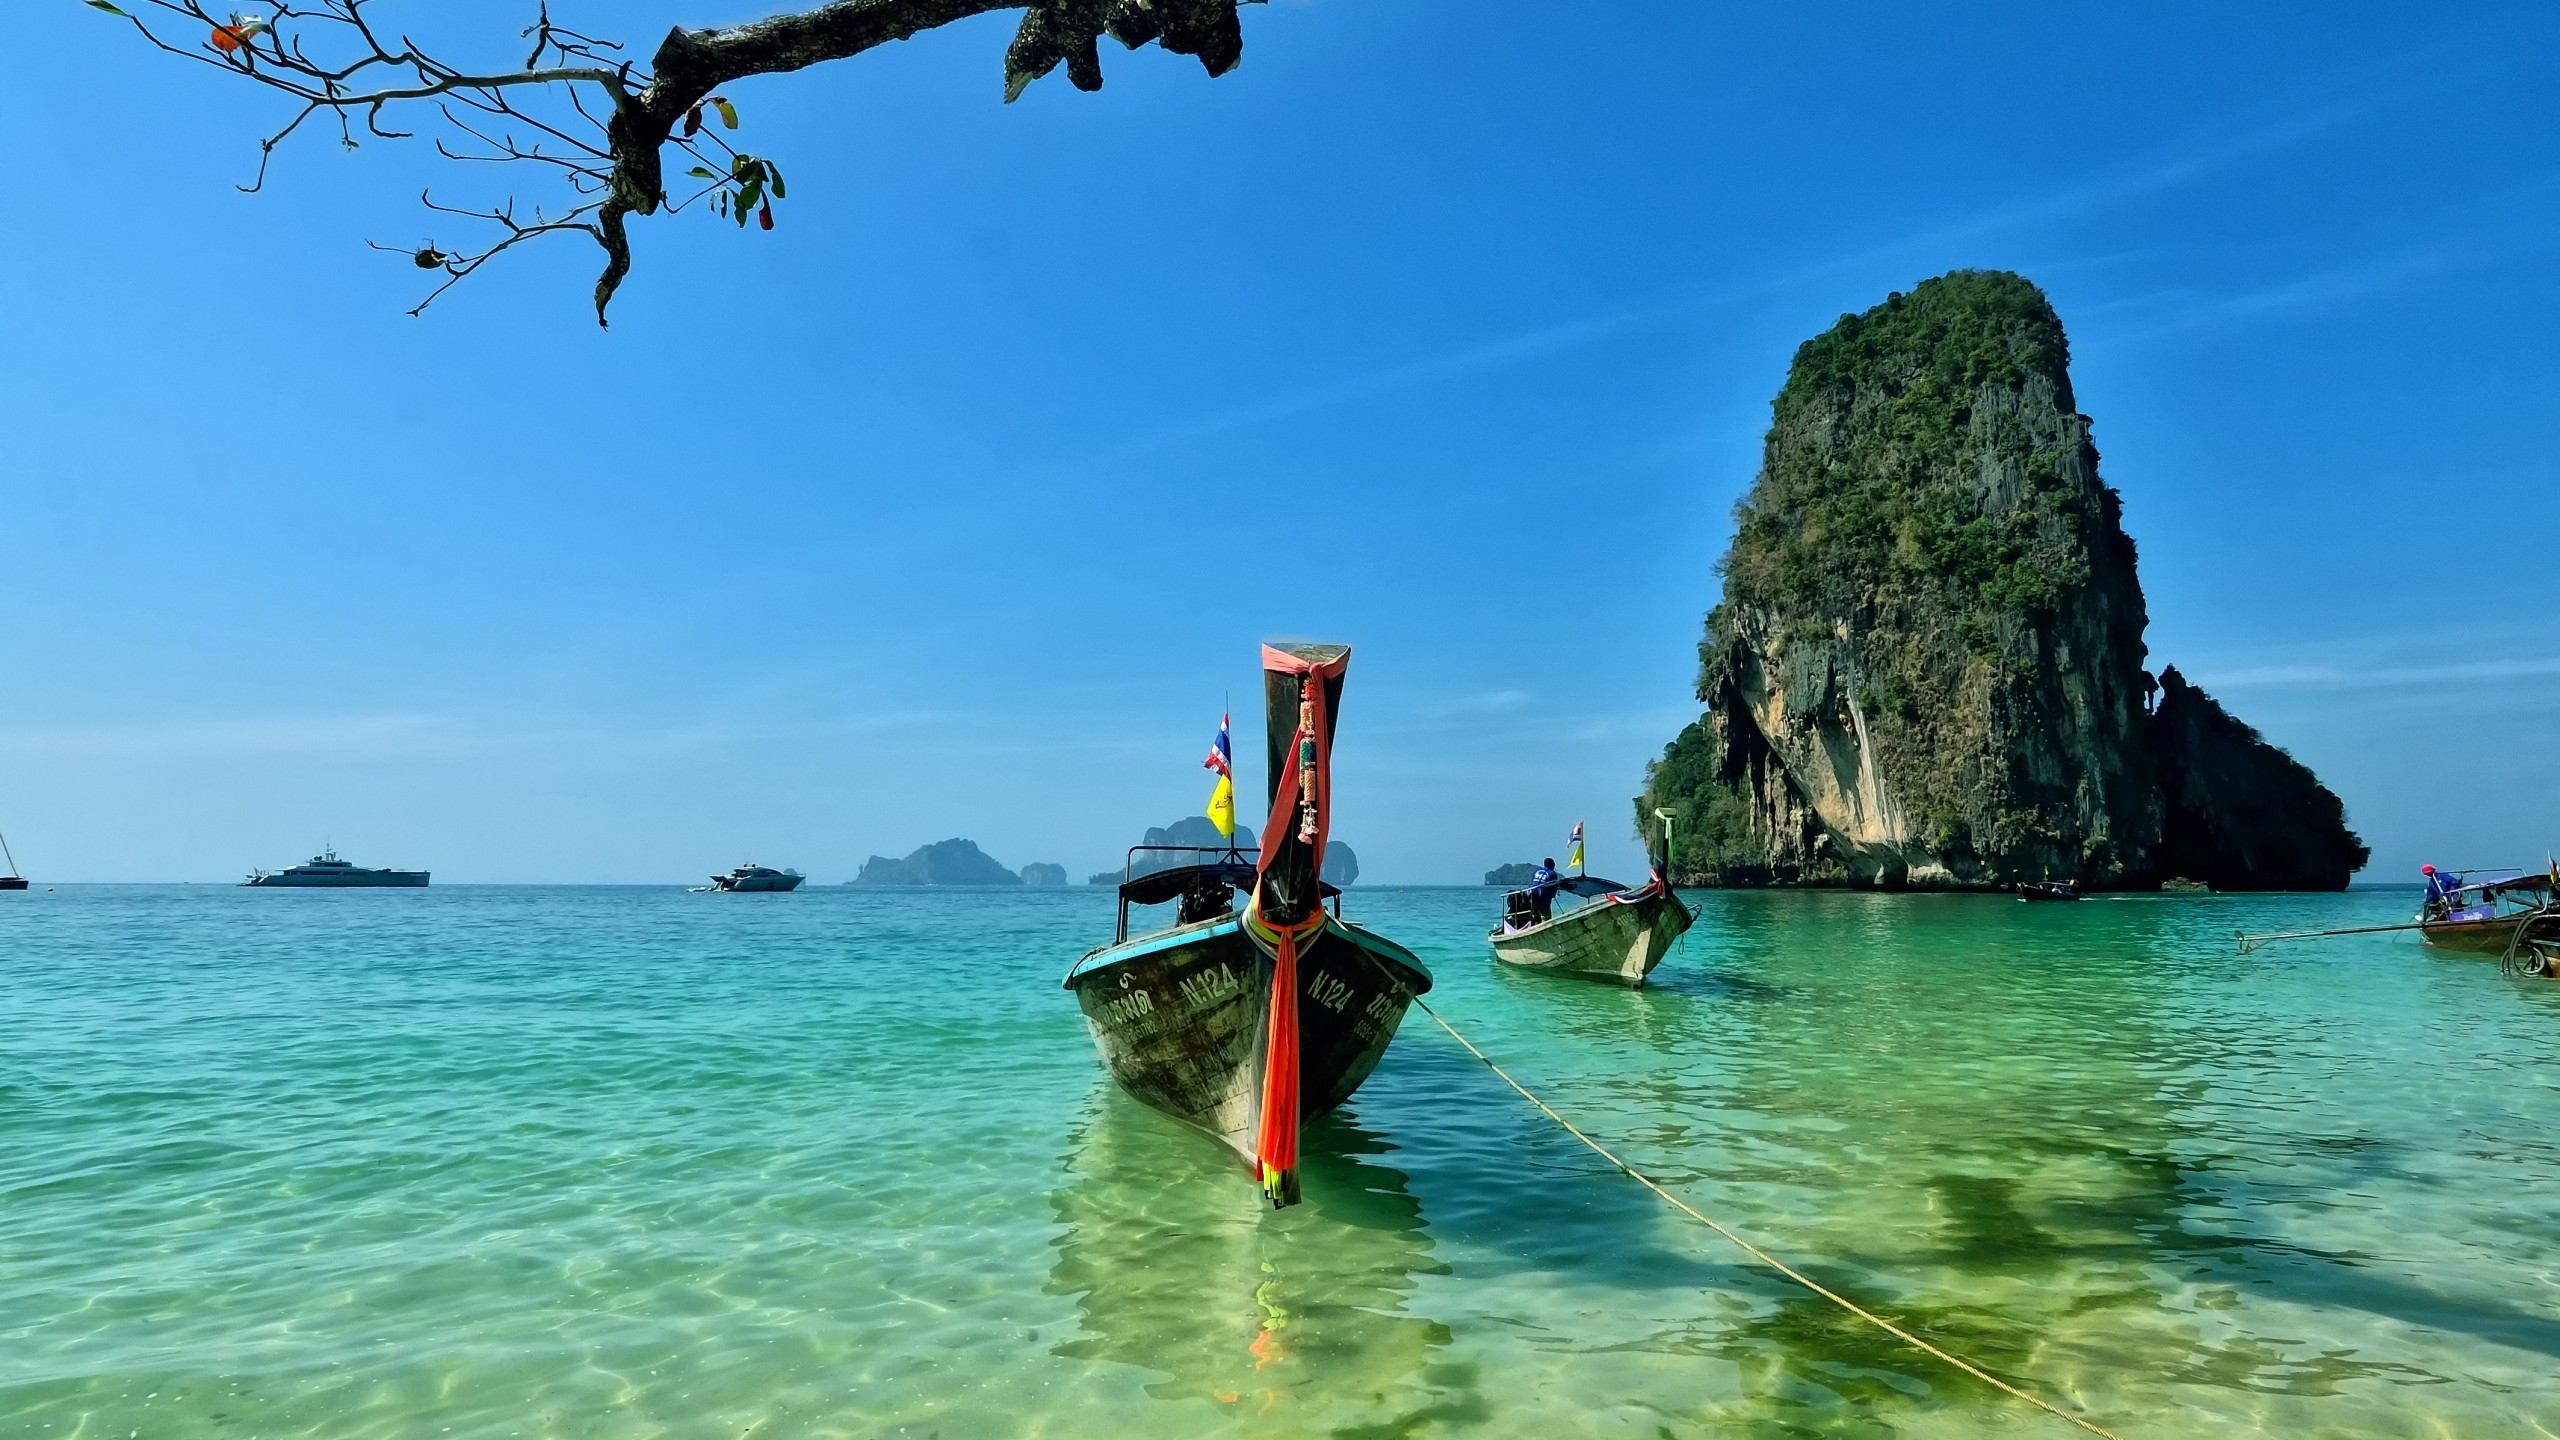 Railay Beach Thailand for 2560x1440 HDTV resolution